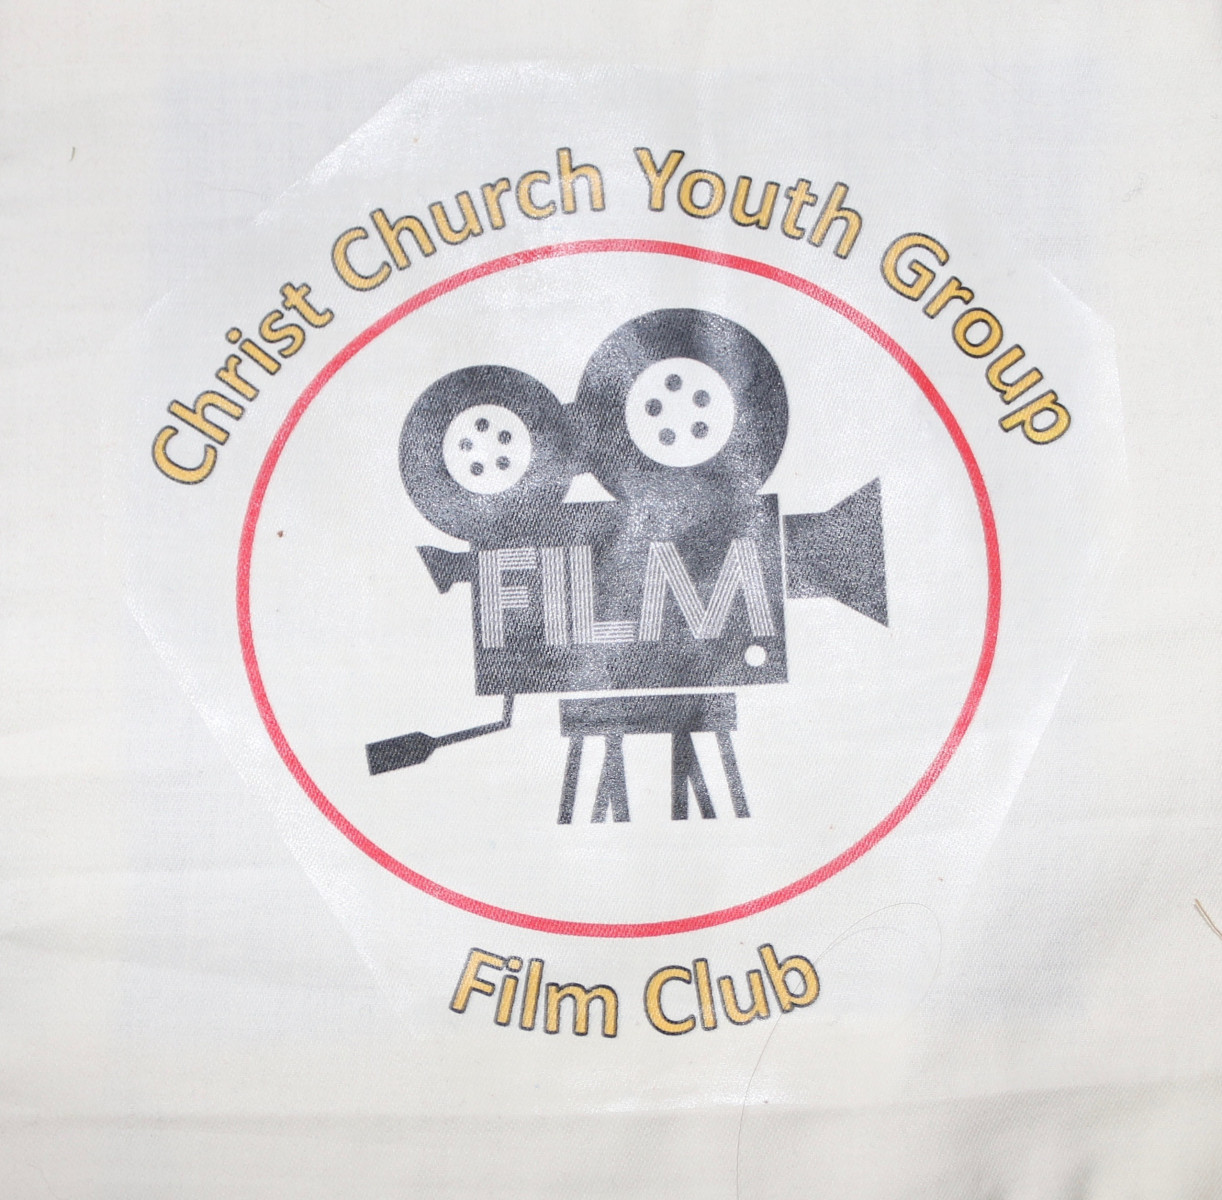 Christ Church Youth Group Film club